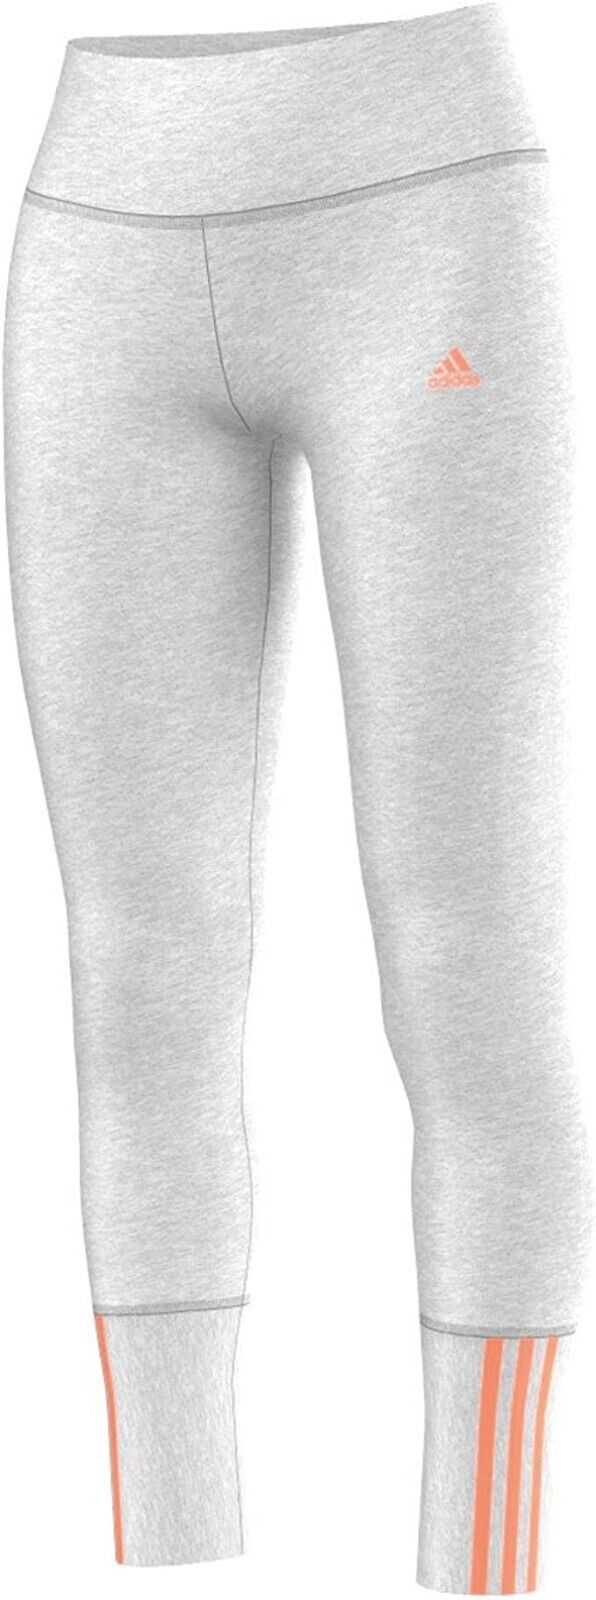 Adidas Essentials Women's Shorts 3 Stripe Tight Gym bottoms leggings Running L